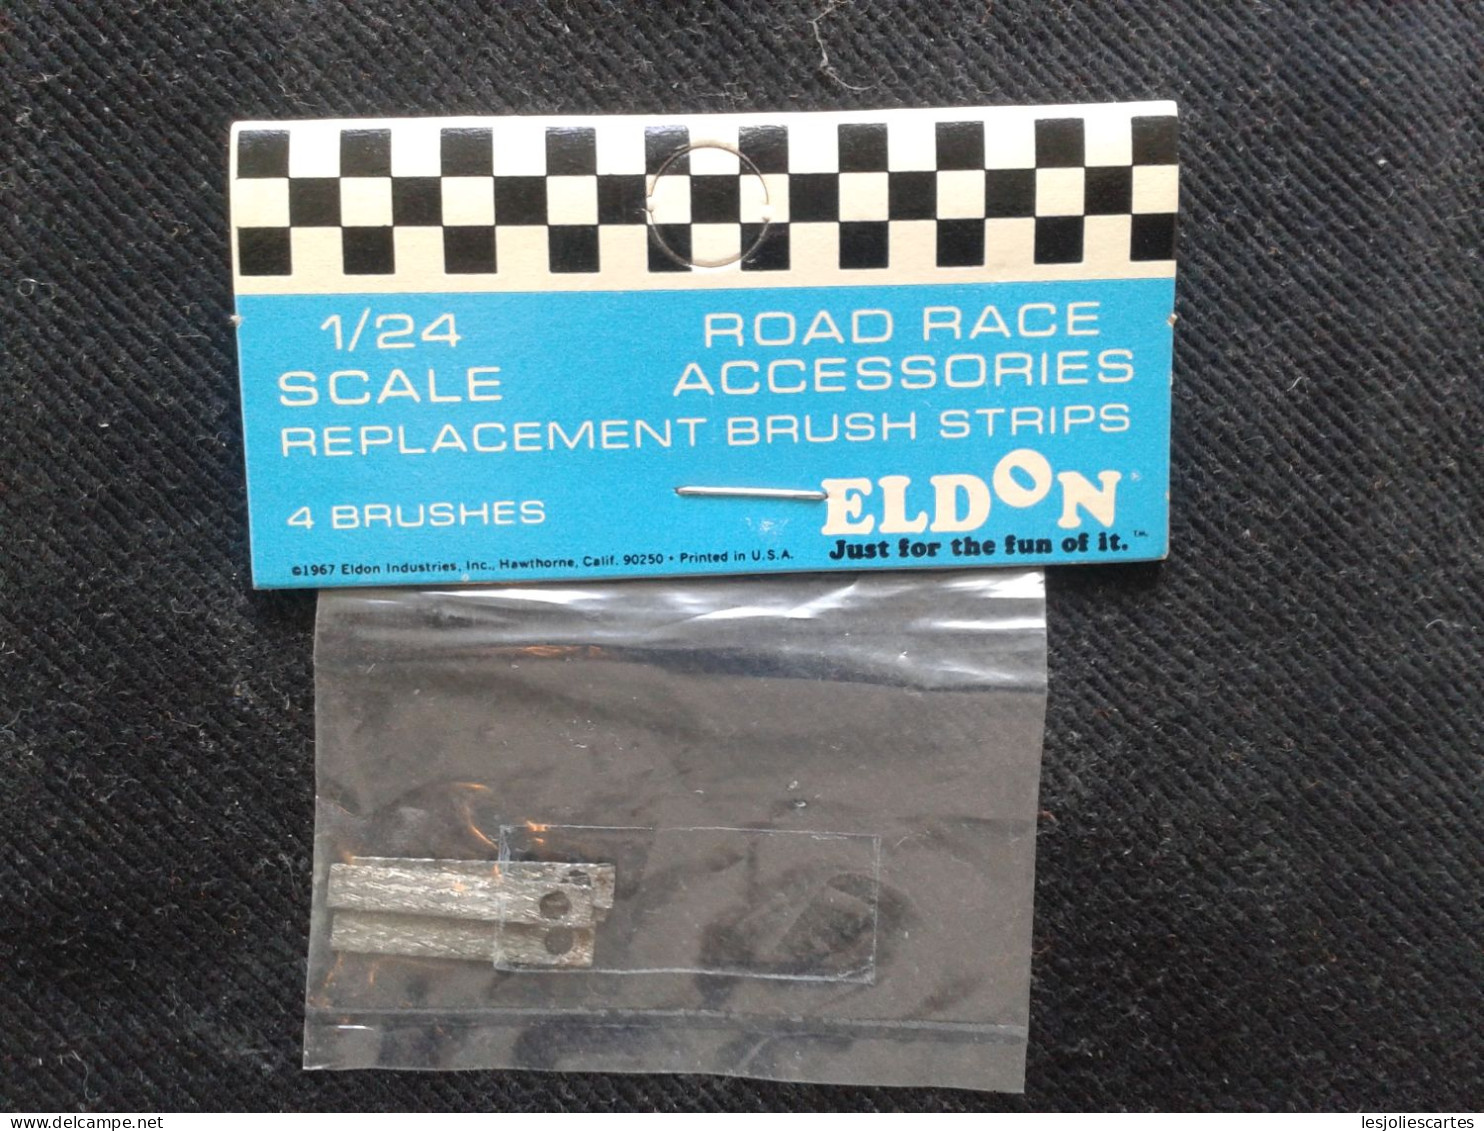 Eldon Replacement Brush Strips Road Race Accessories 1/24 - Circuiti Automobilistici